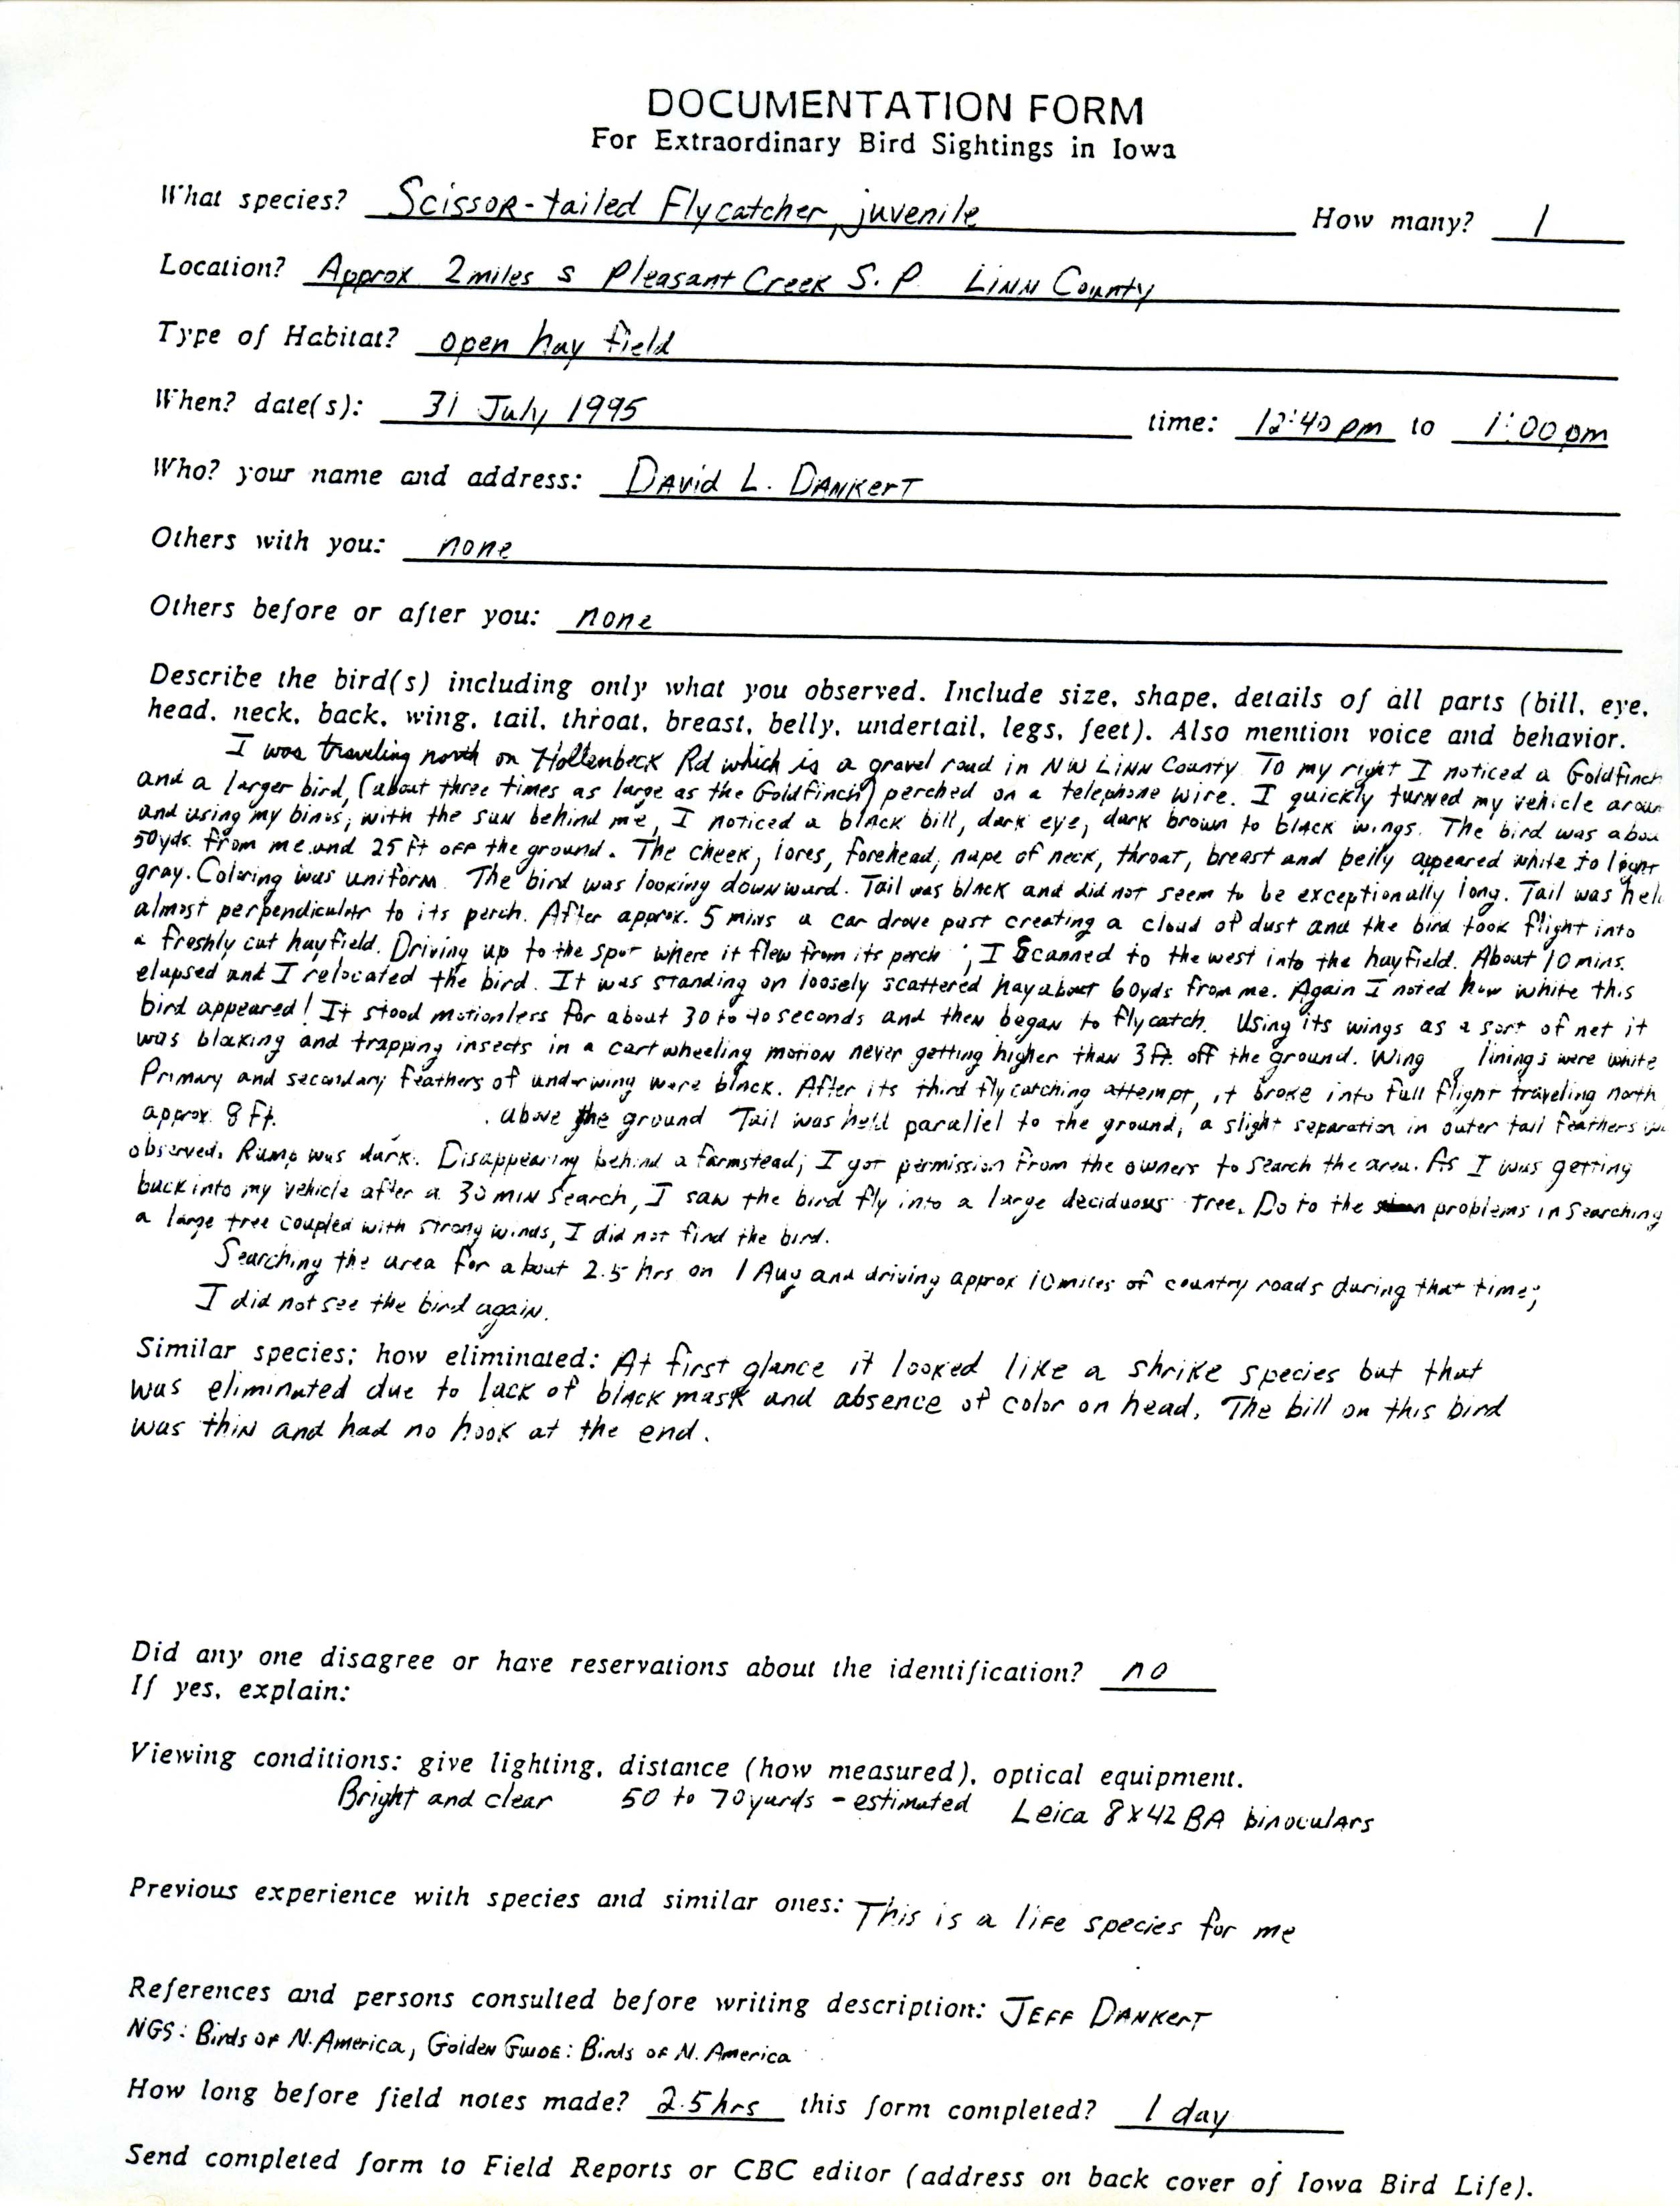 Documentation form for extraordinary bird sightings in Iowa, Scissor-tailed Flycatcher, July 31, 1995, David Dankert